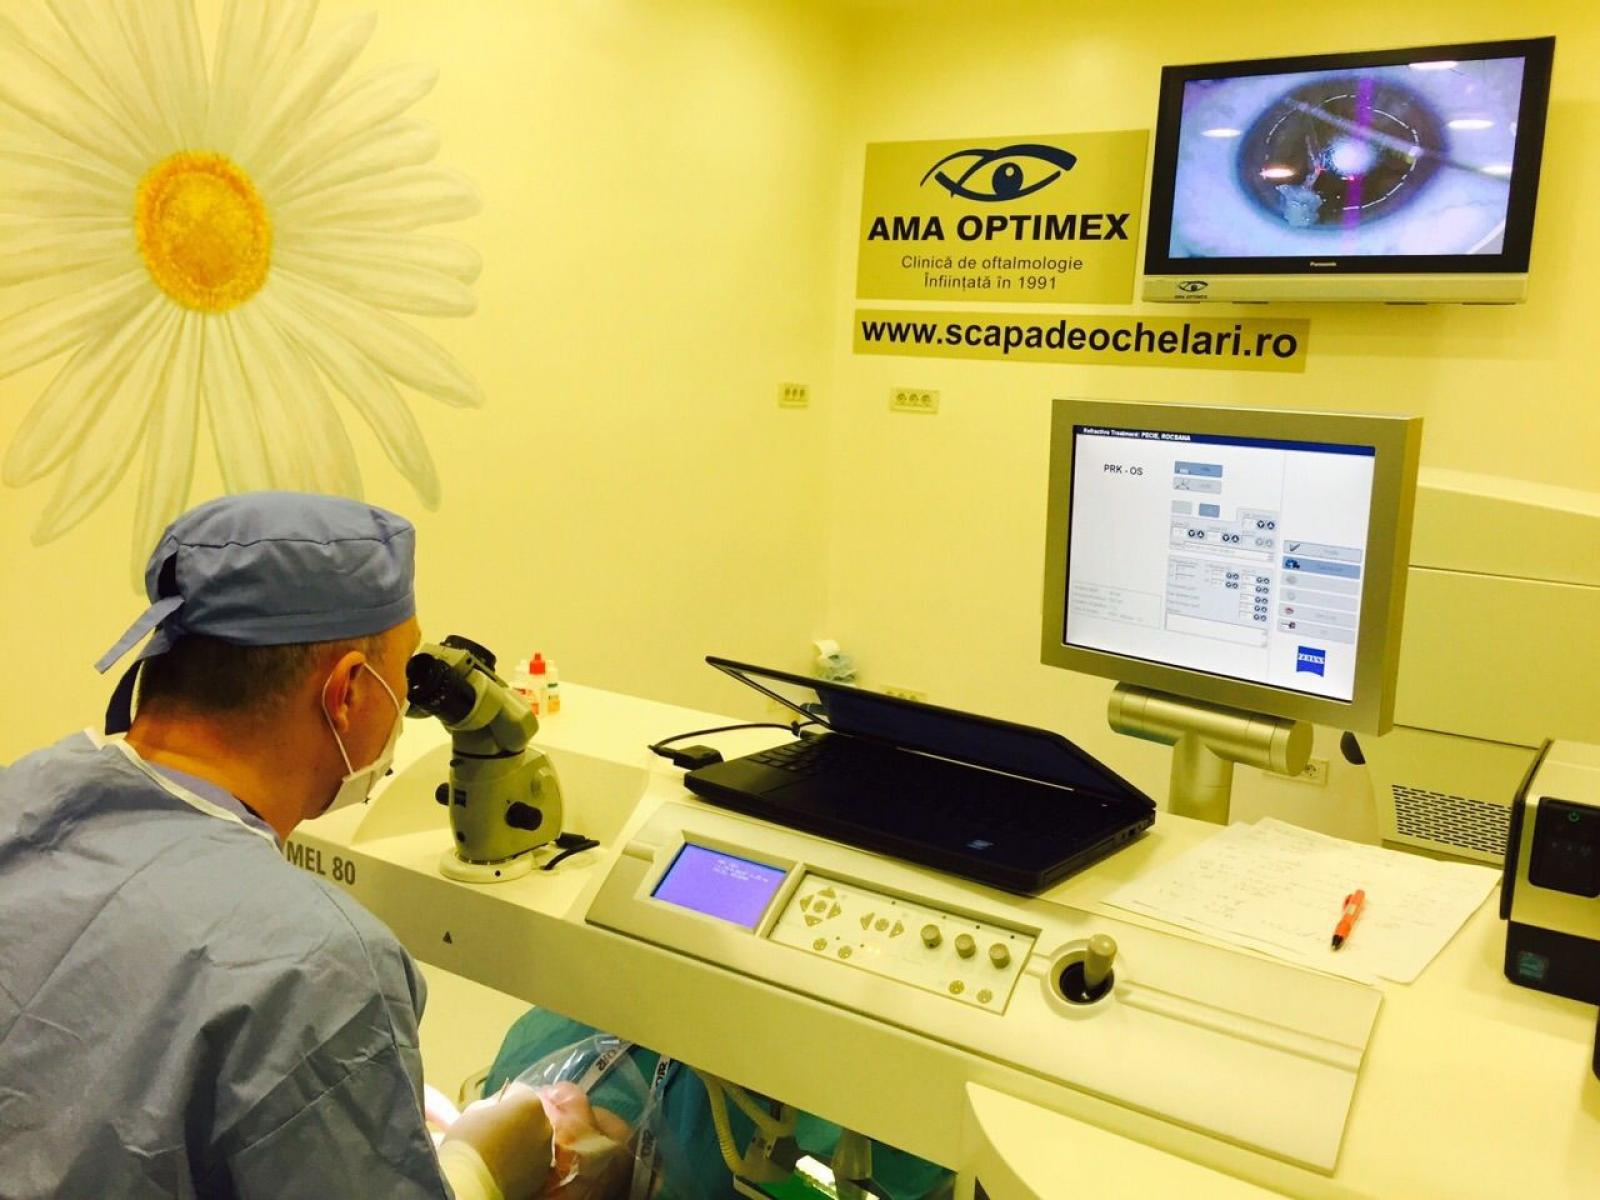 AMA OPTIMEX - Clinica de oftalmologie - Clinica_de_oftalmologie_Ama_Optimex_-_scapadeochelari-__3.jpg